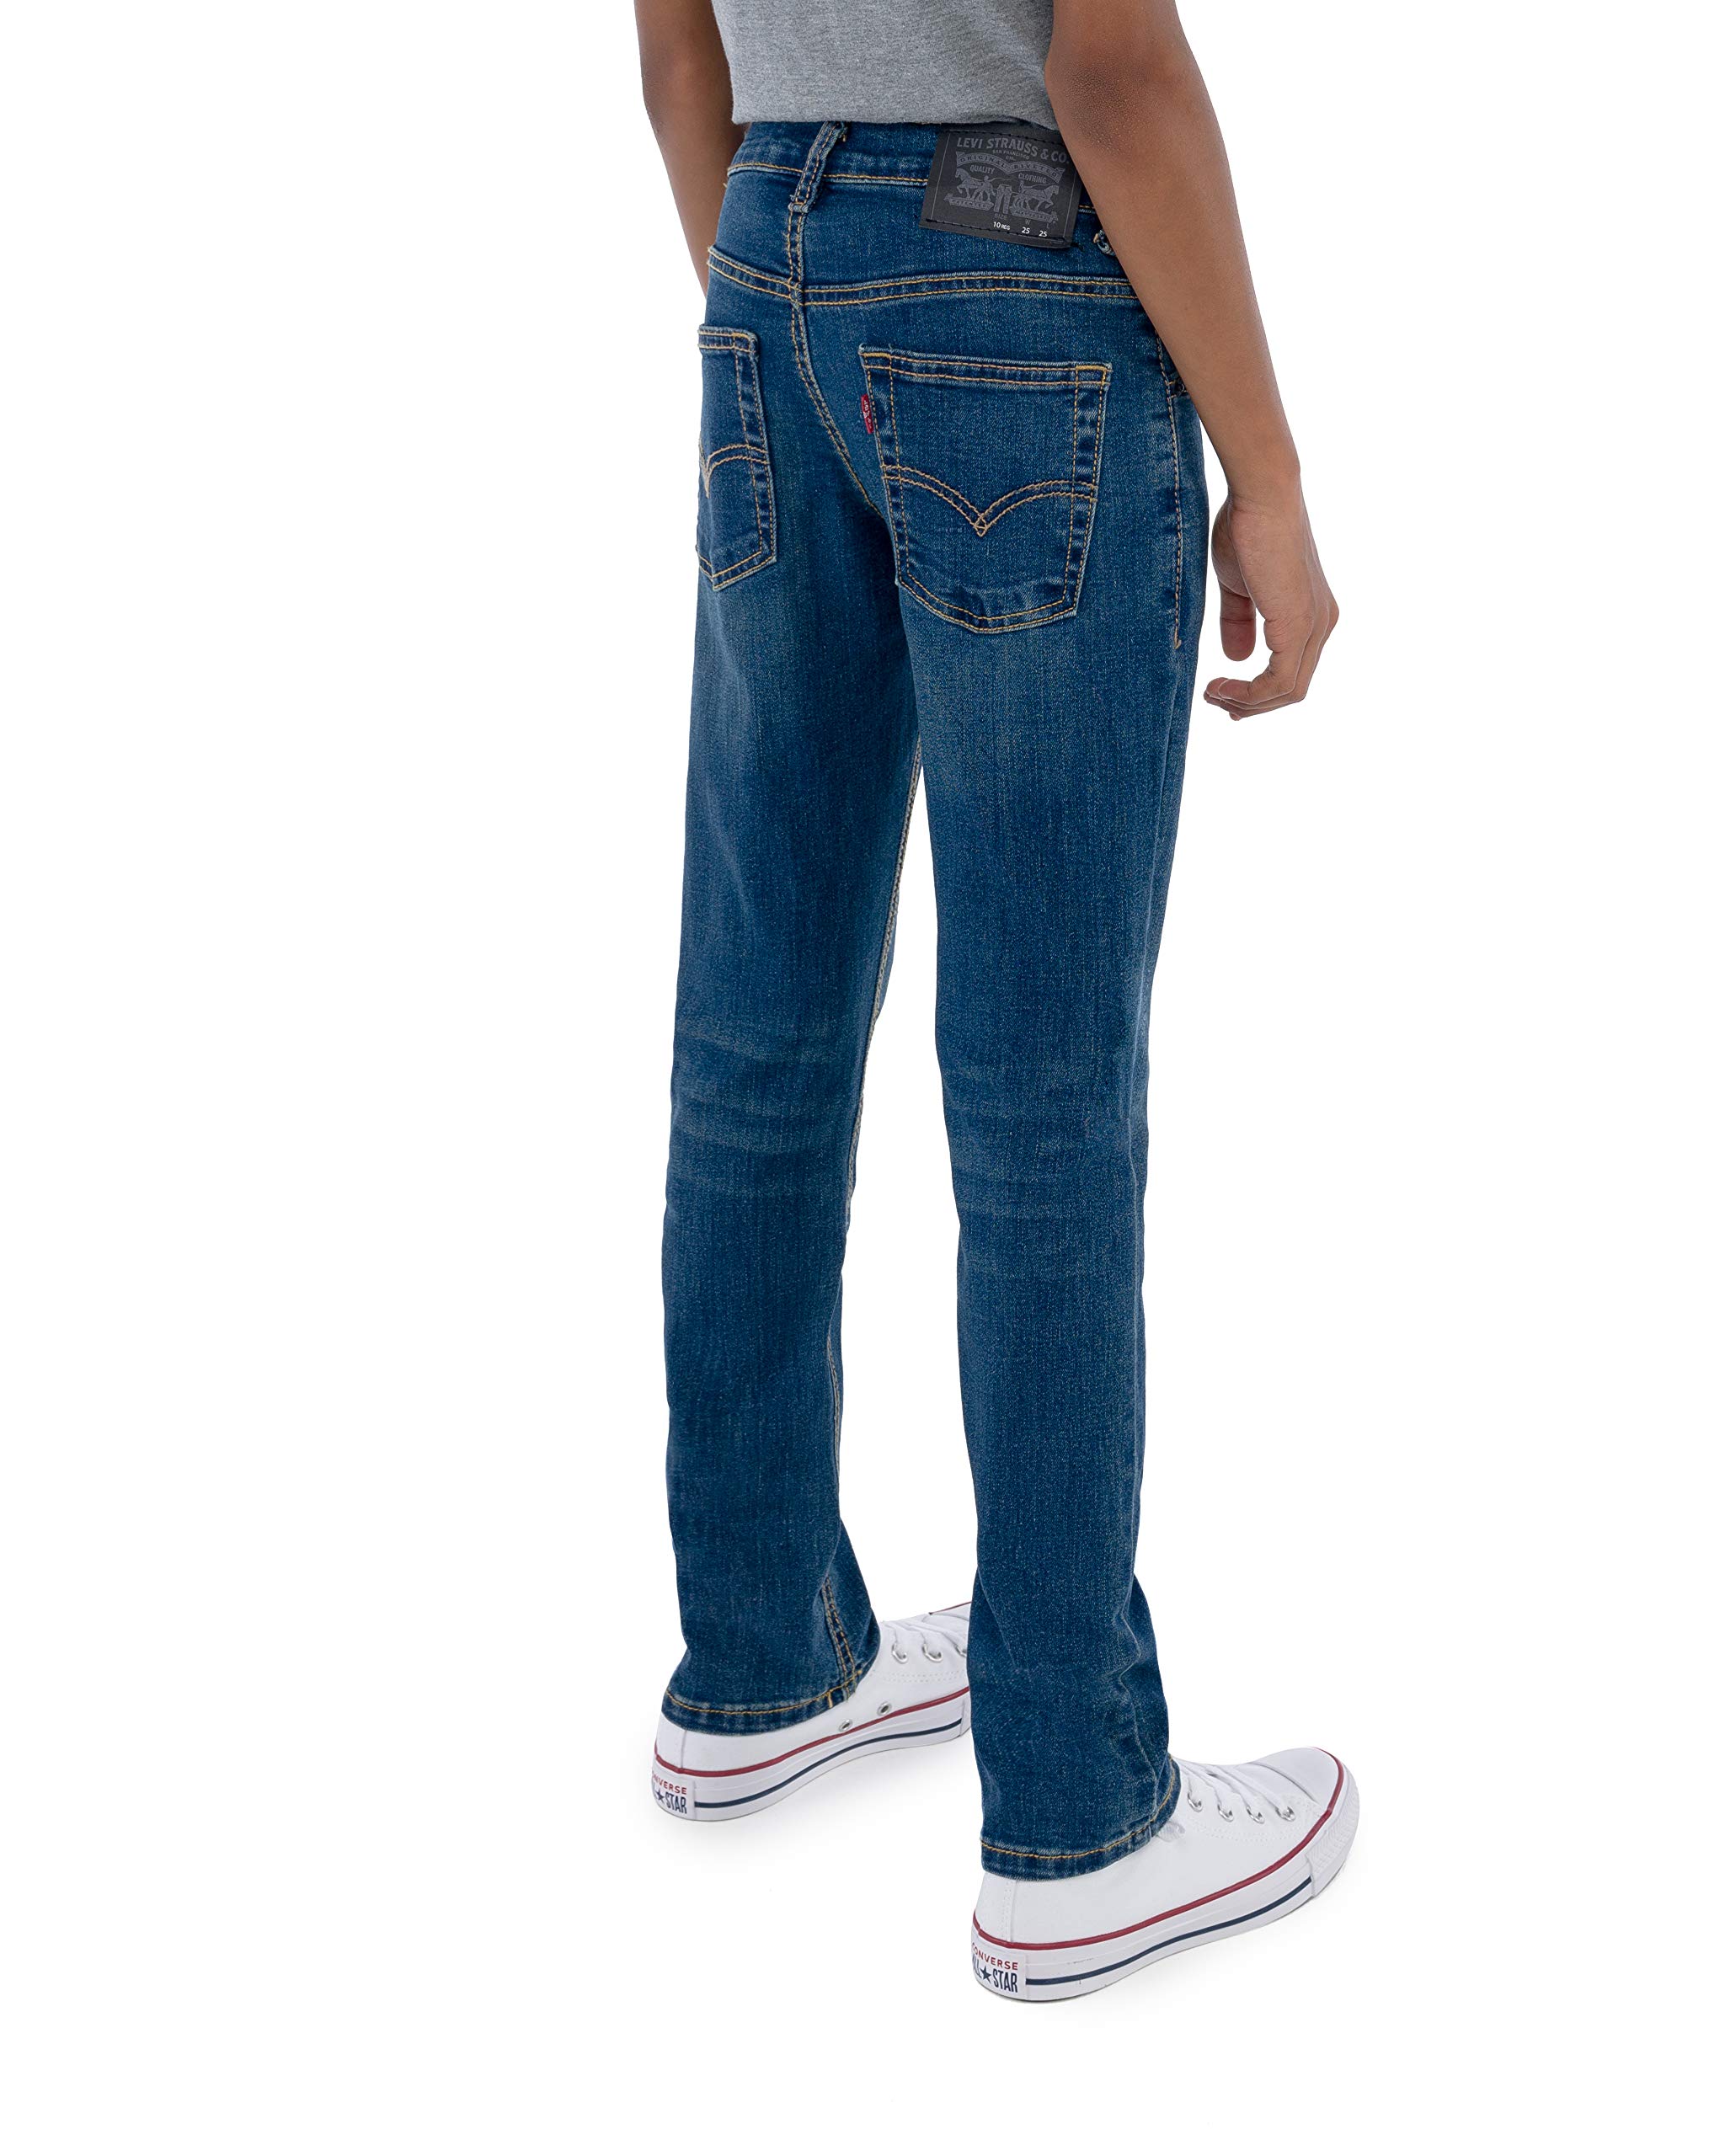 Levi's Boys' 511 Slim Fit Jeans